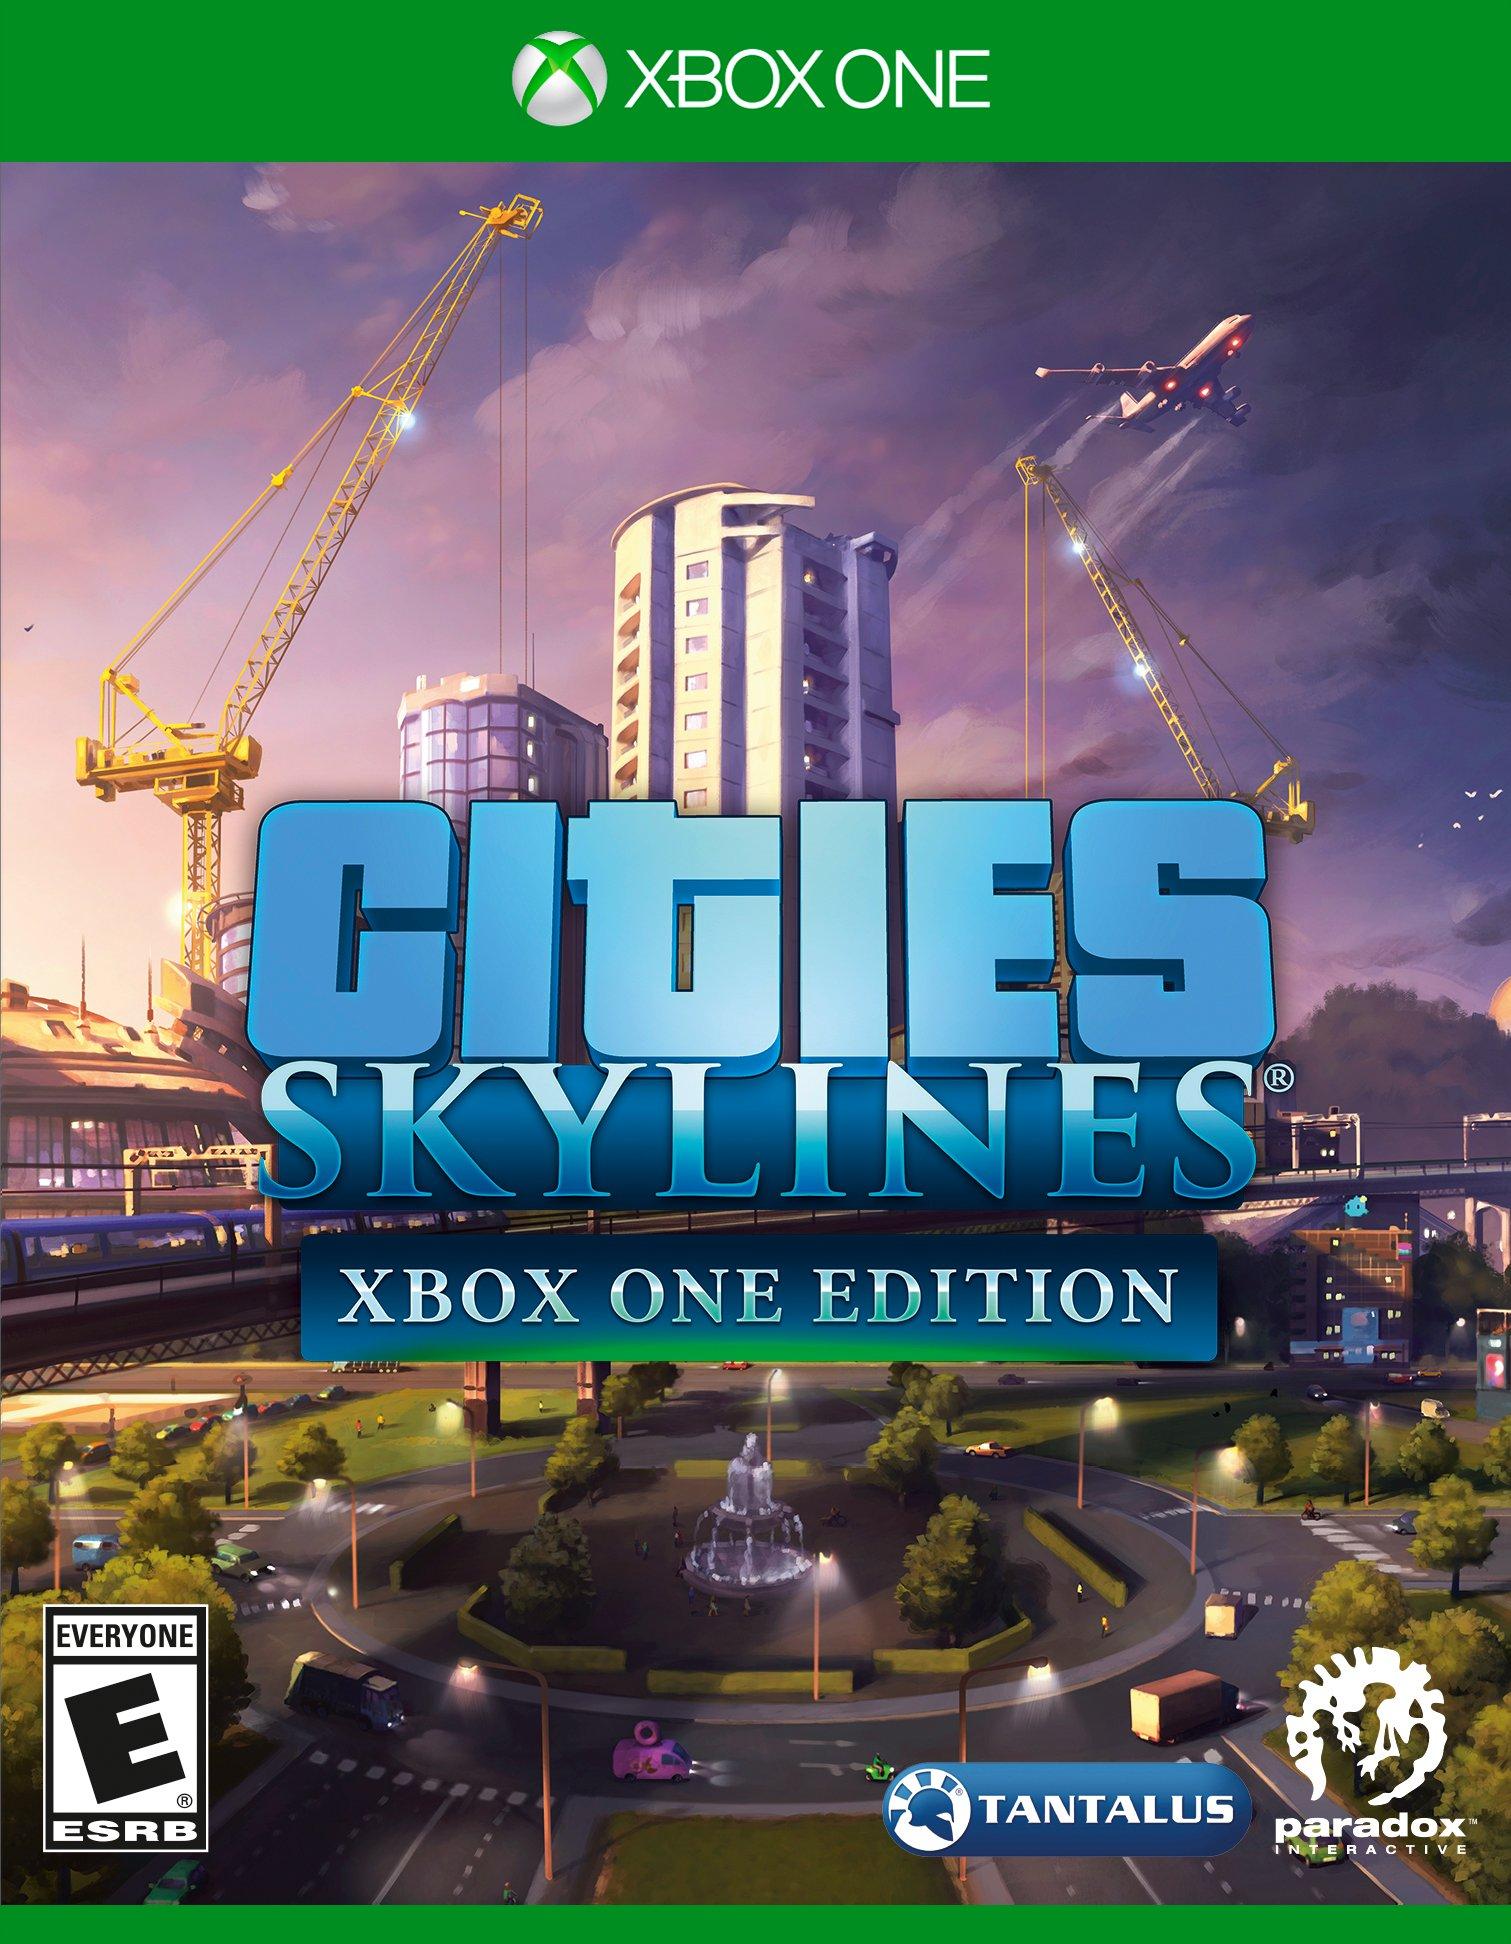 Cities: Skylines - Paradox Interactive